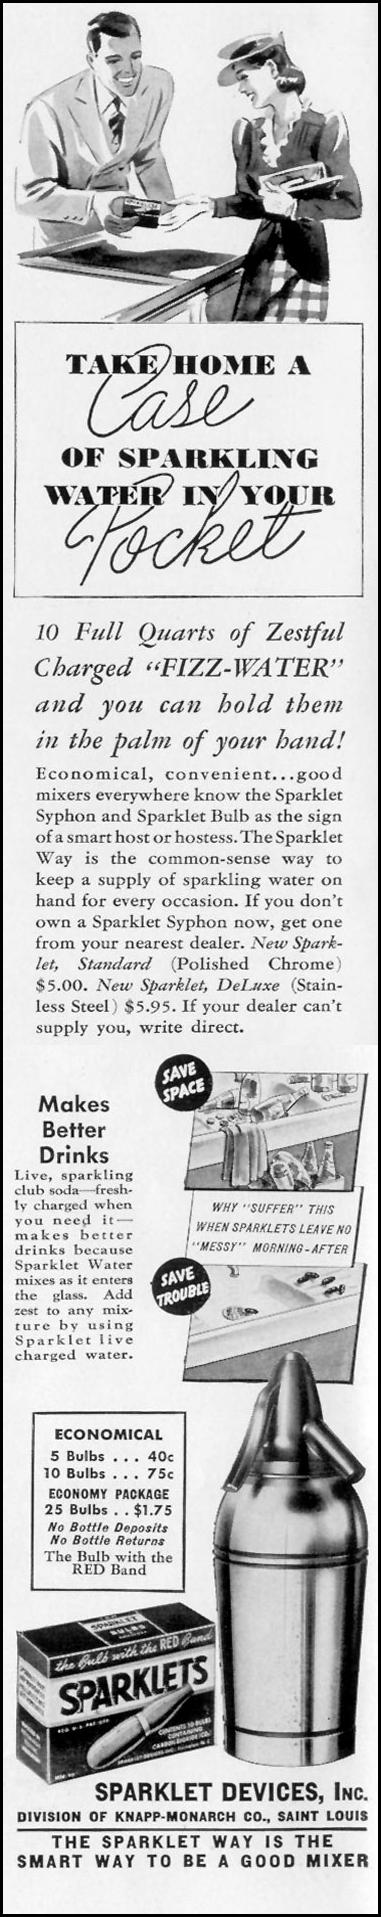 SPARKLET CLUB SODA
LIFE
09/16/1940
p. 86